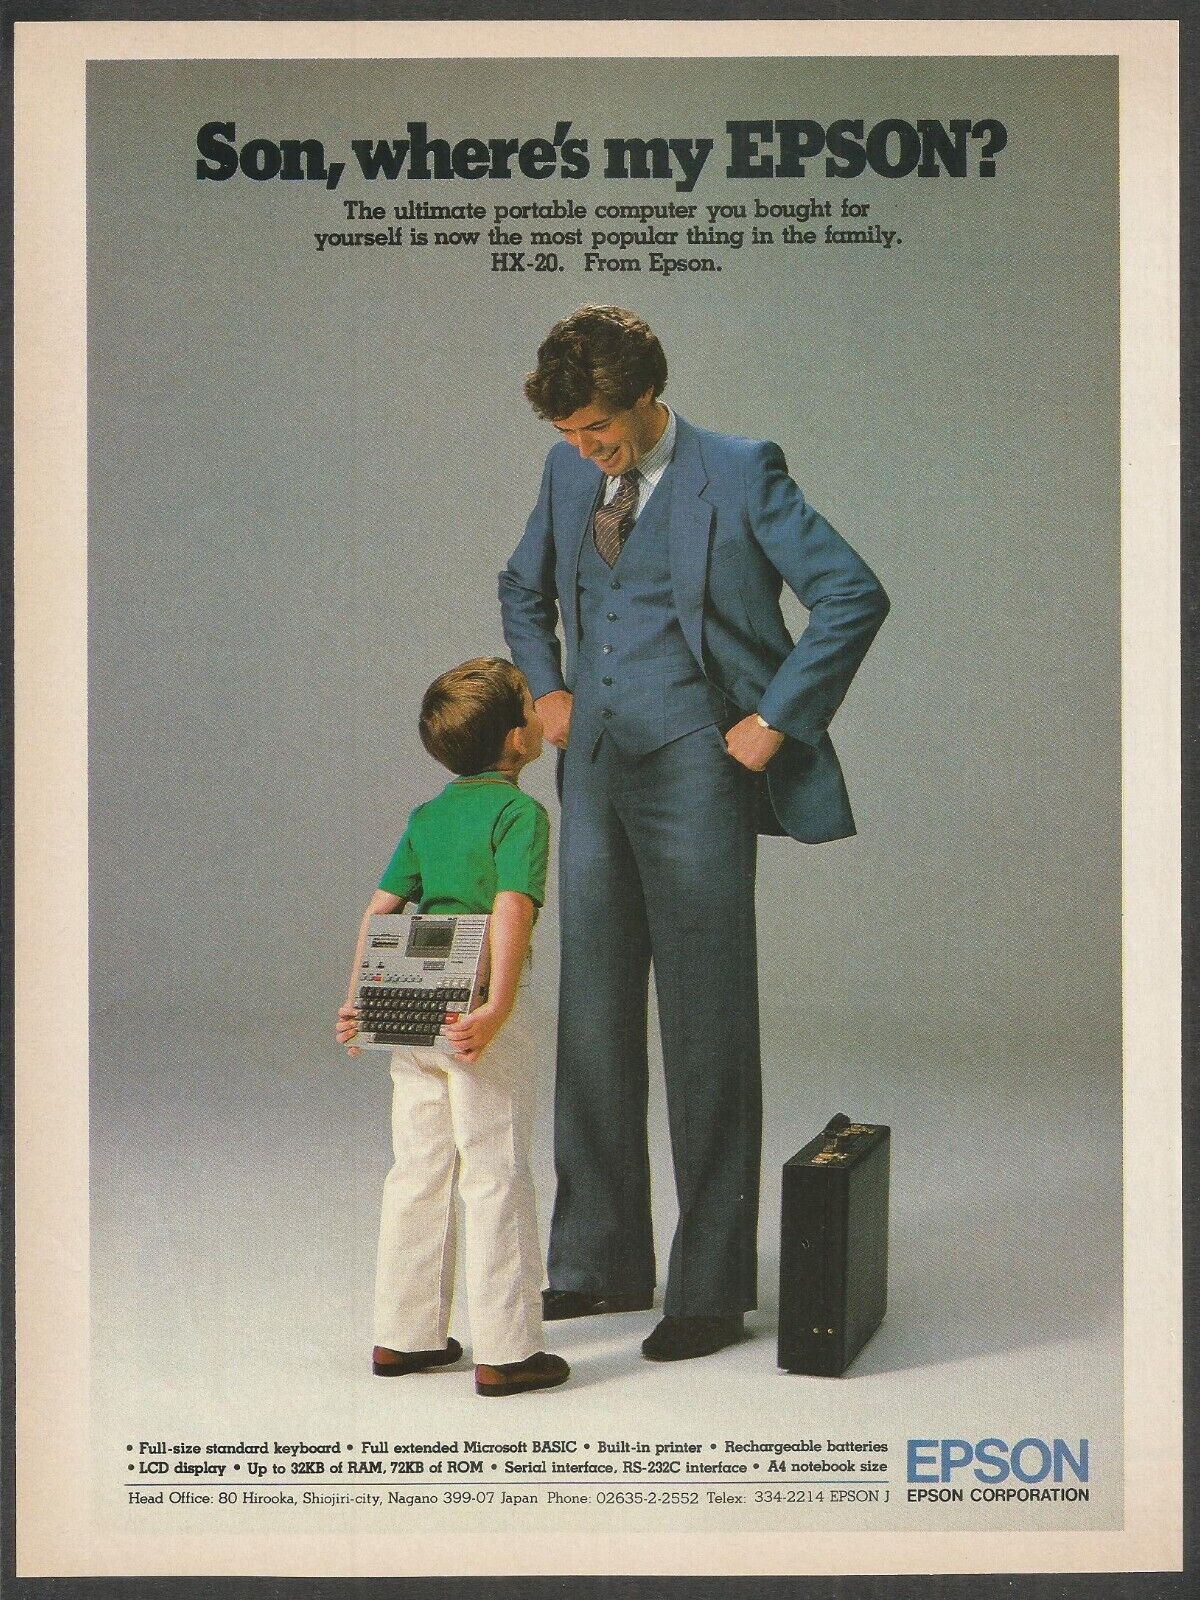 EPSON HX20. The Ultimate Portable Computer - 1982 Vintage Print Ad